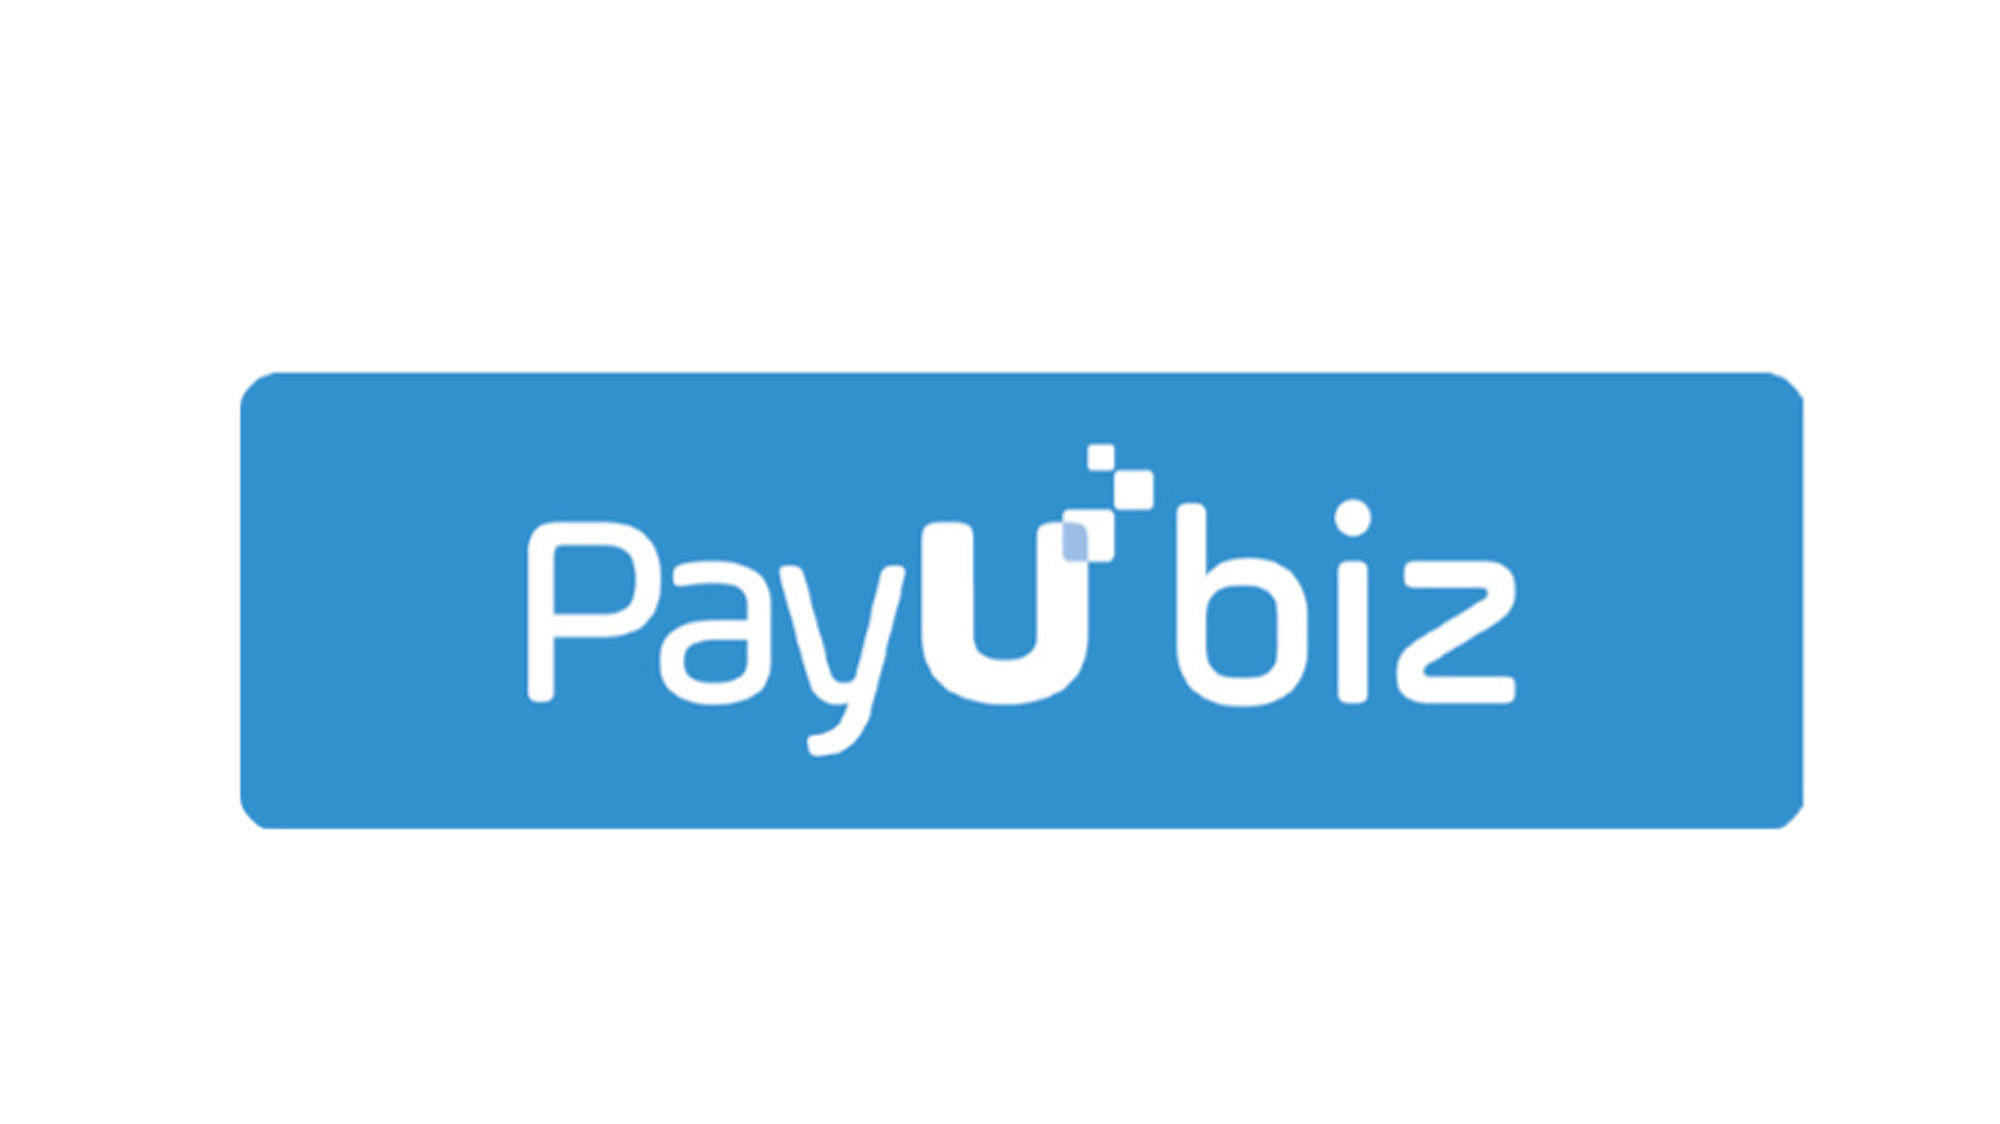 PayUbiz has introduced OneTap technology for mobile payments. (Photo: PayUbiz)